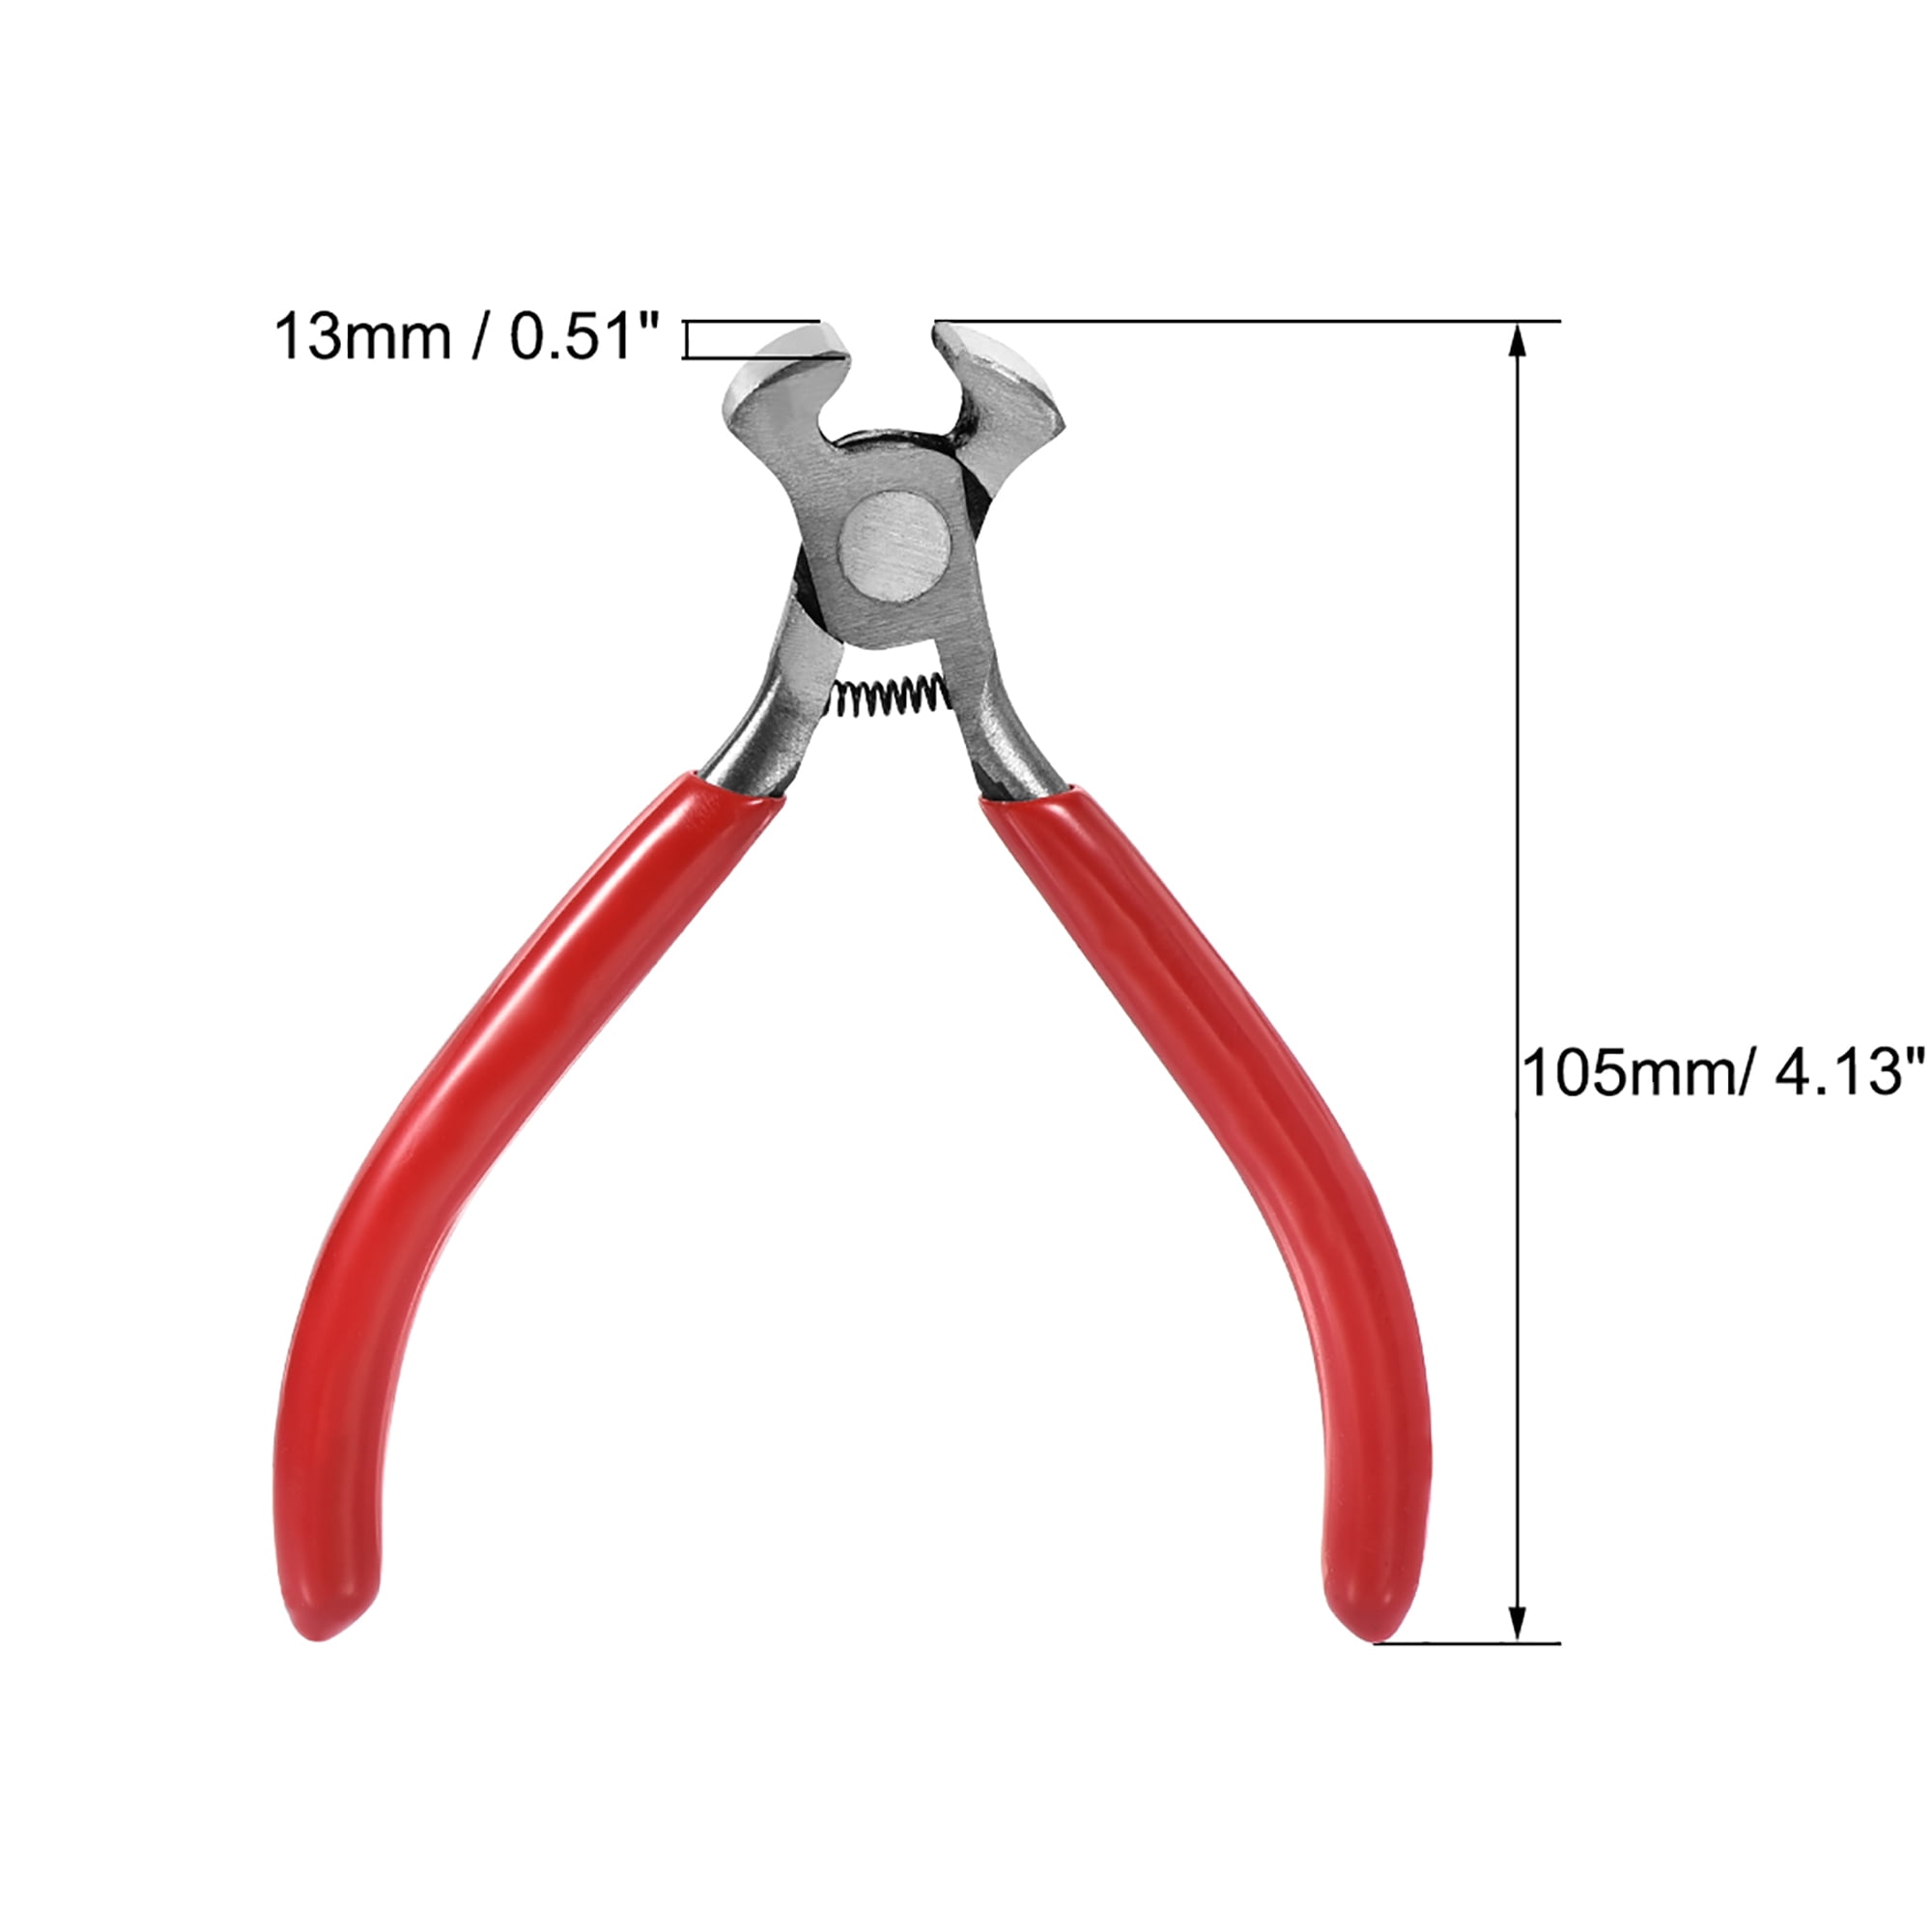 Heavy-Duty End-Nipper Cutting Pliers Nail Puller Tool Premium High-carbon Pliers 